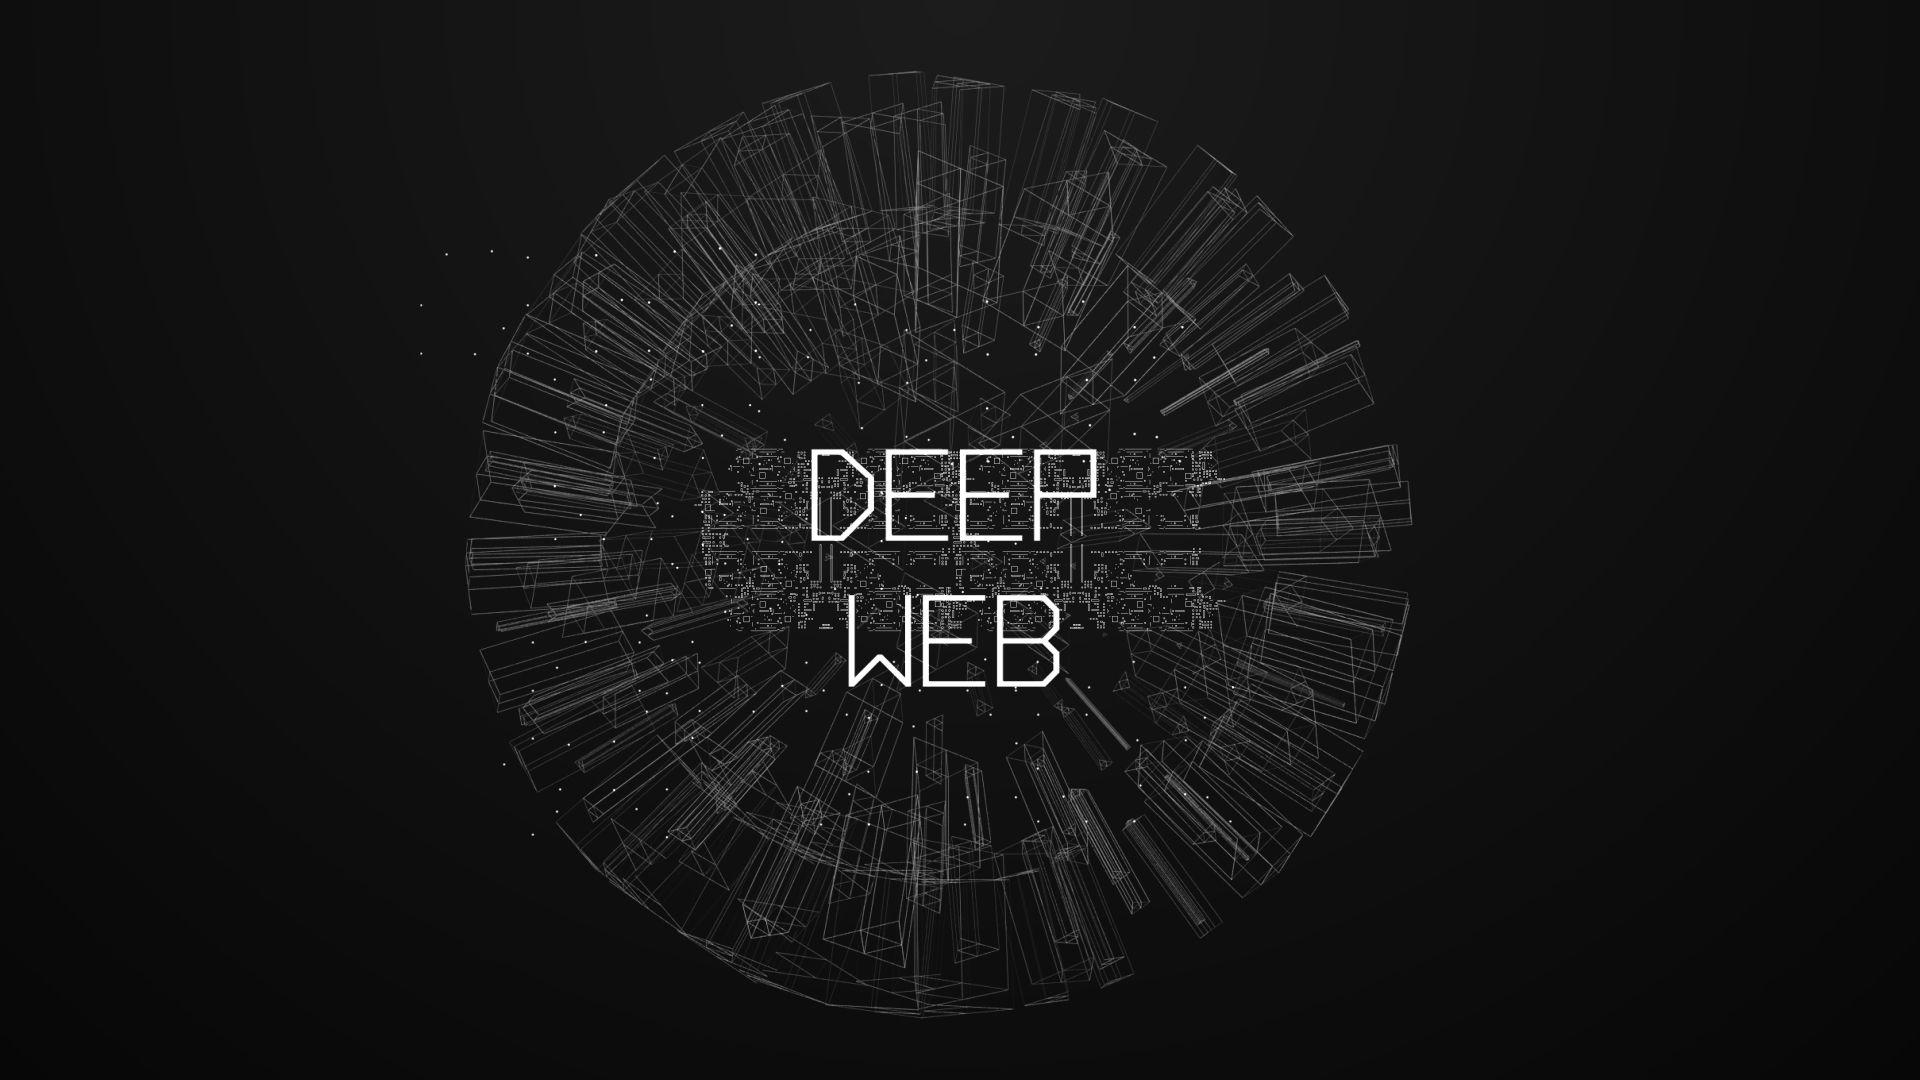 Deep net websites